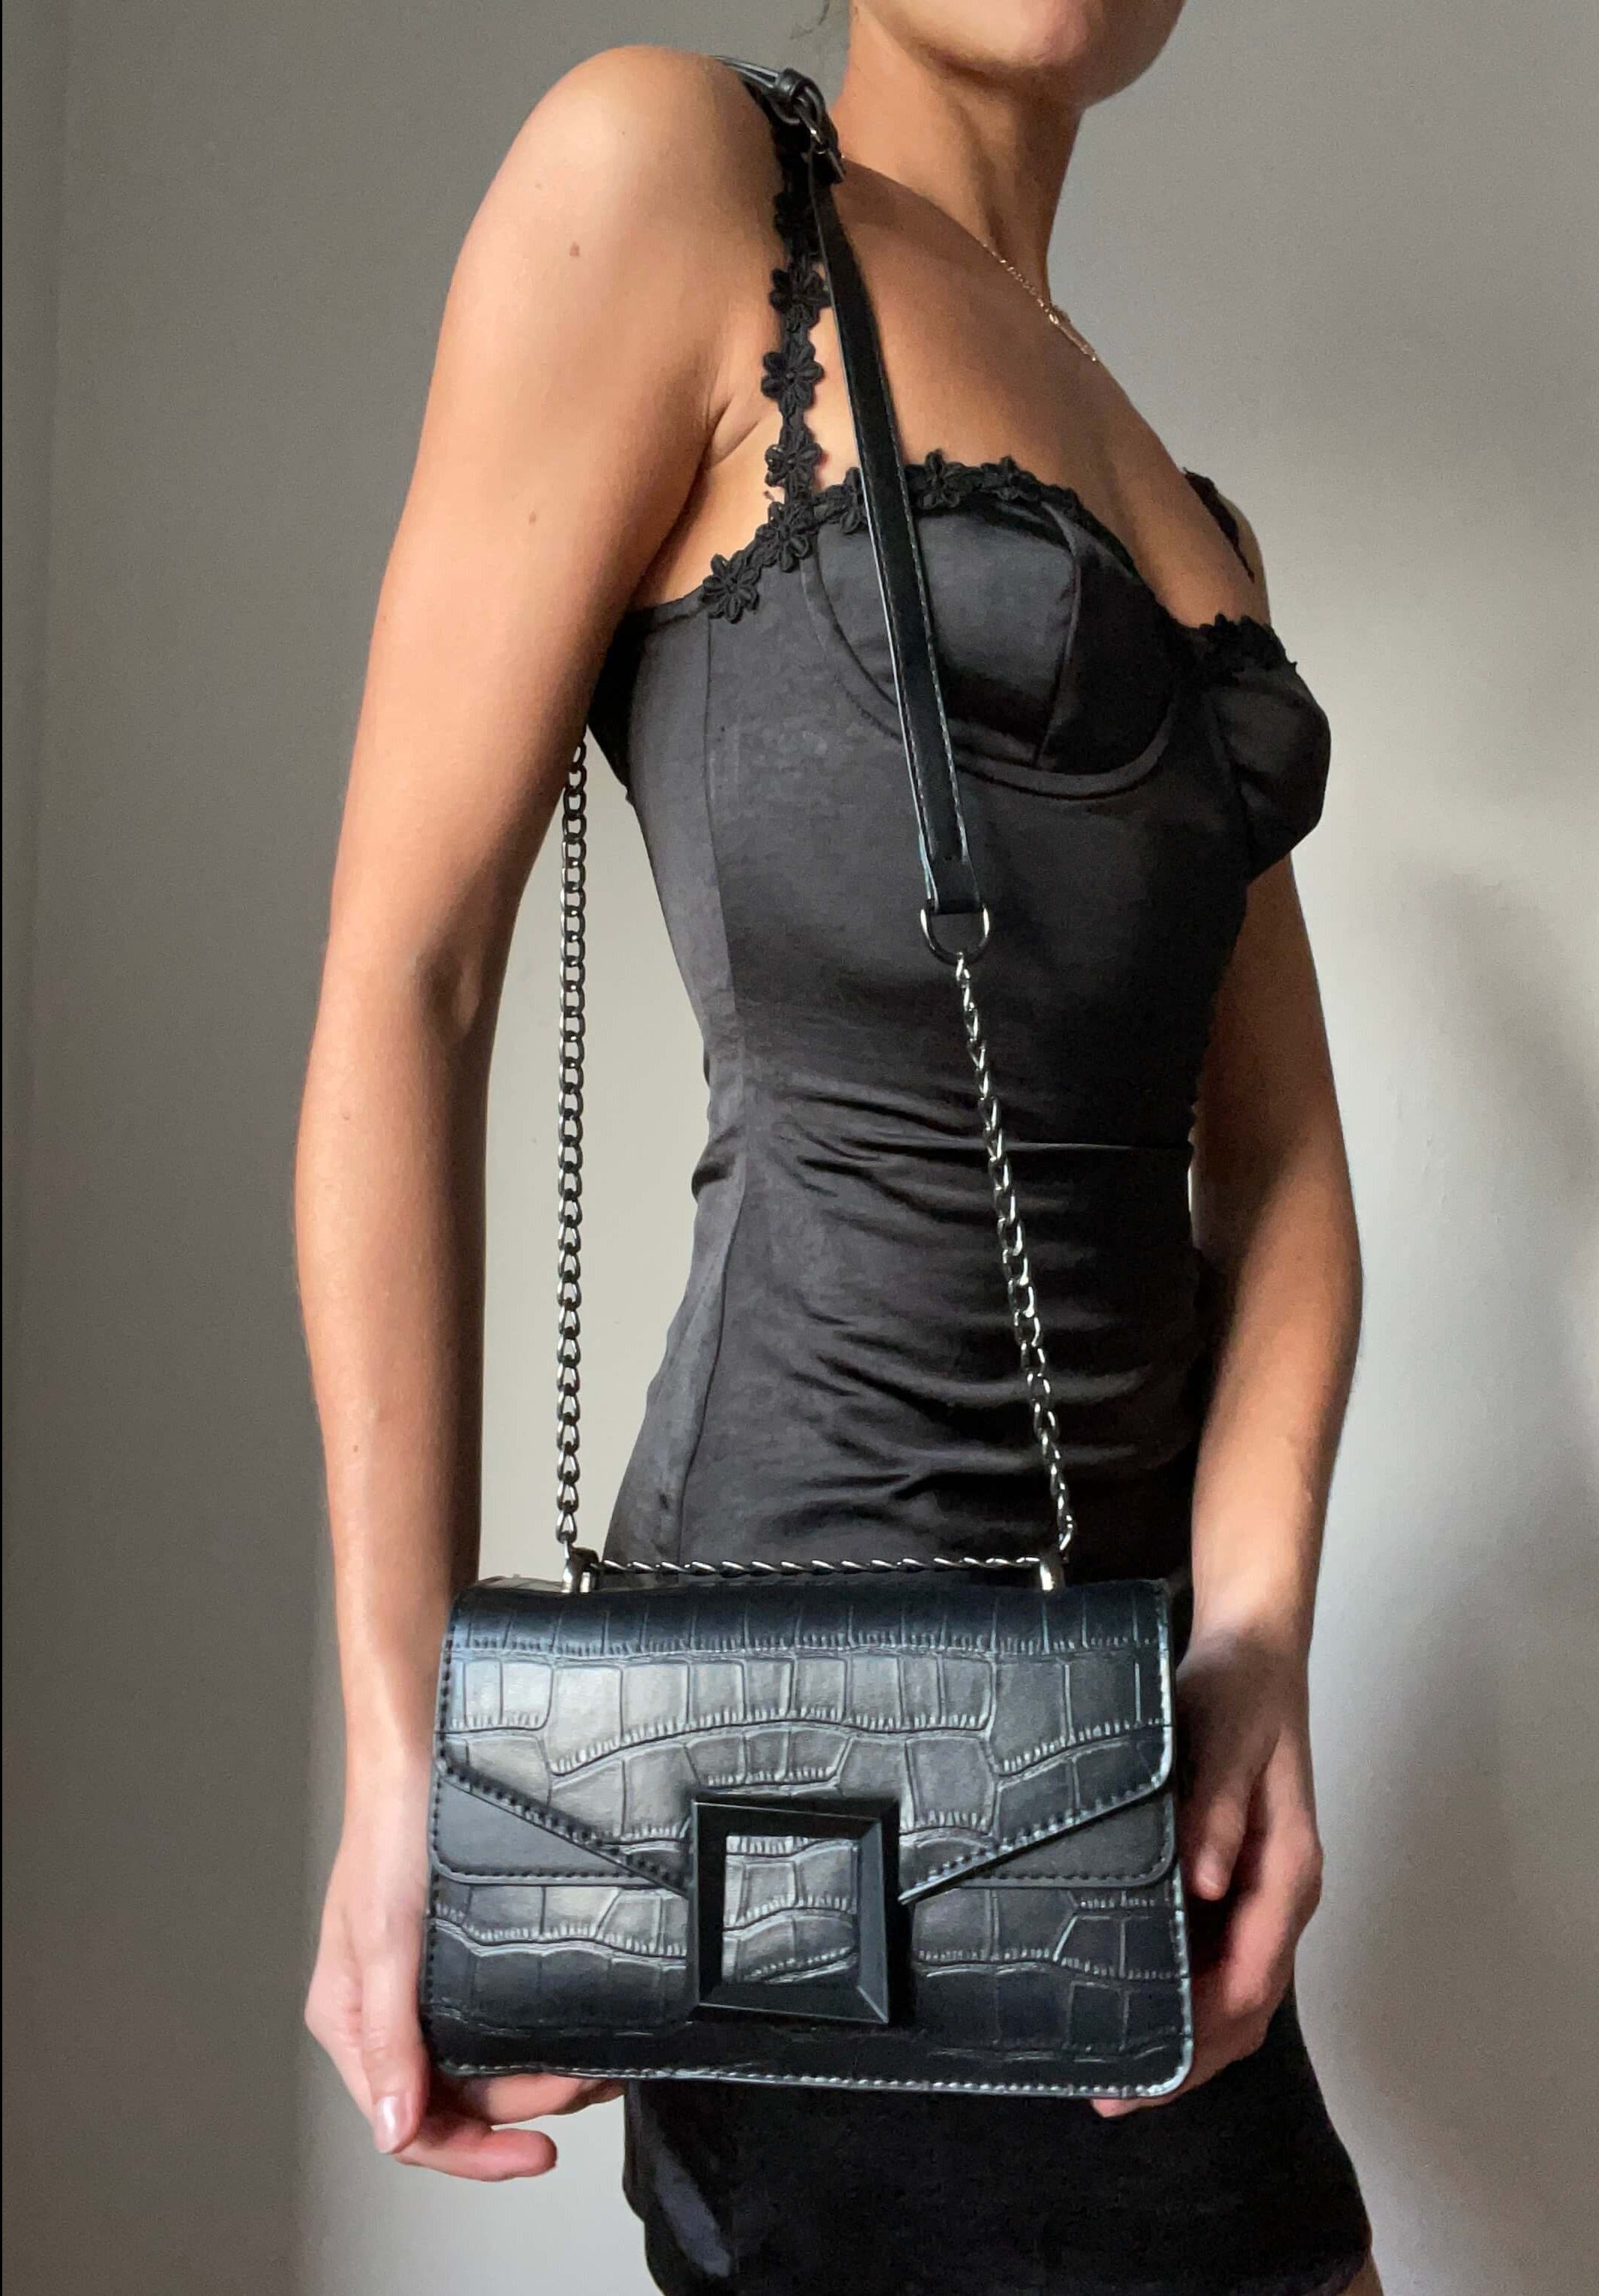 Handbag with chain strap